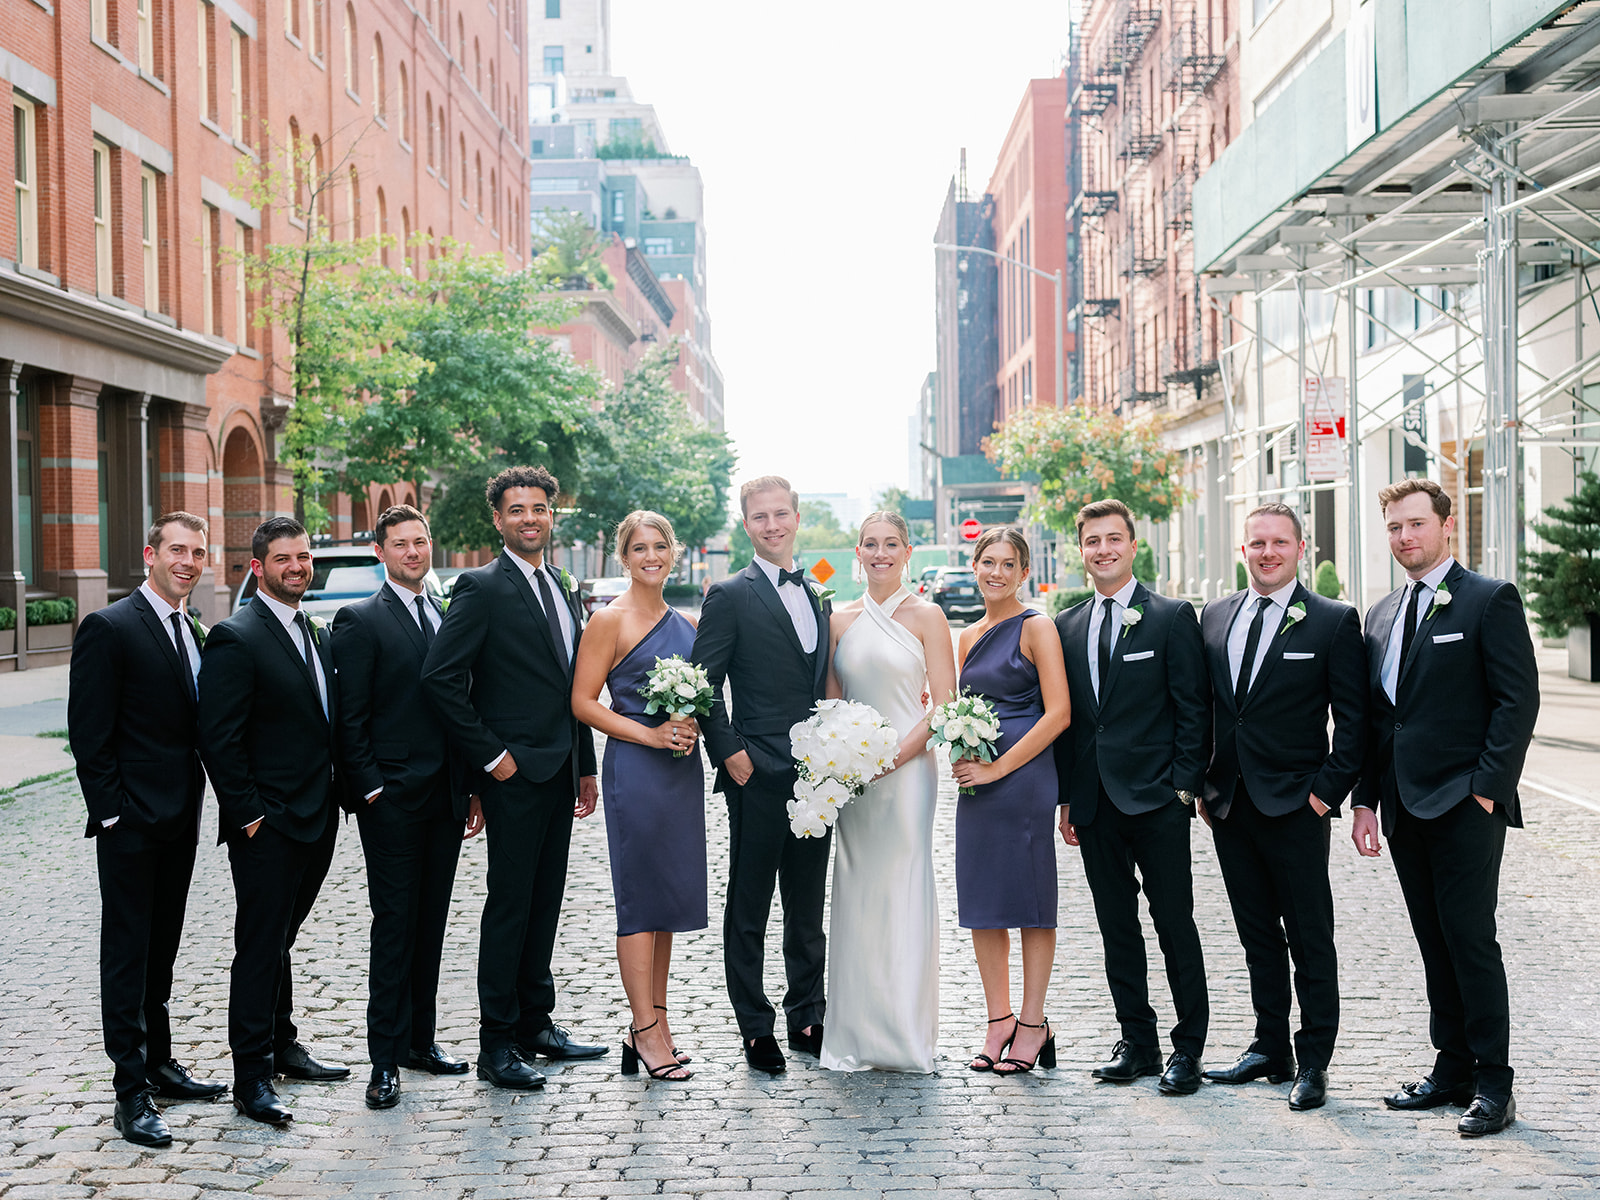 West Village bride, groom, and wedding party portrait in New York.